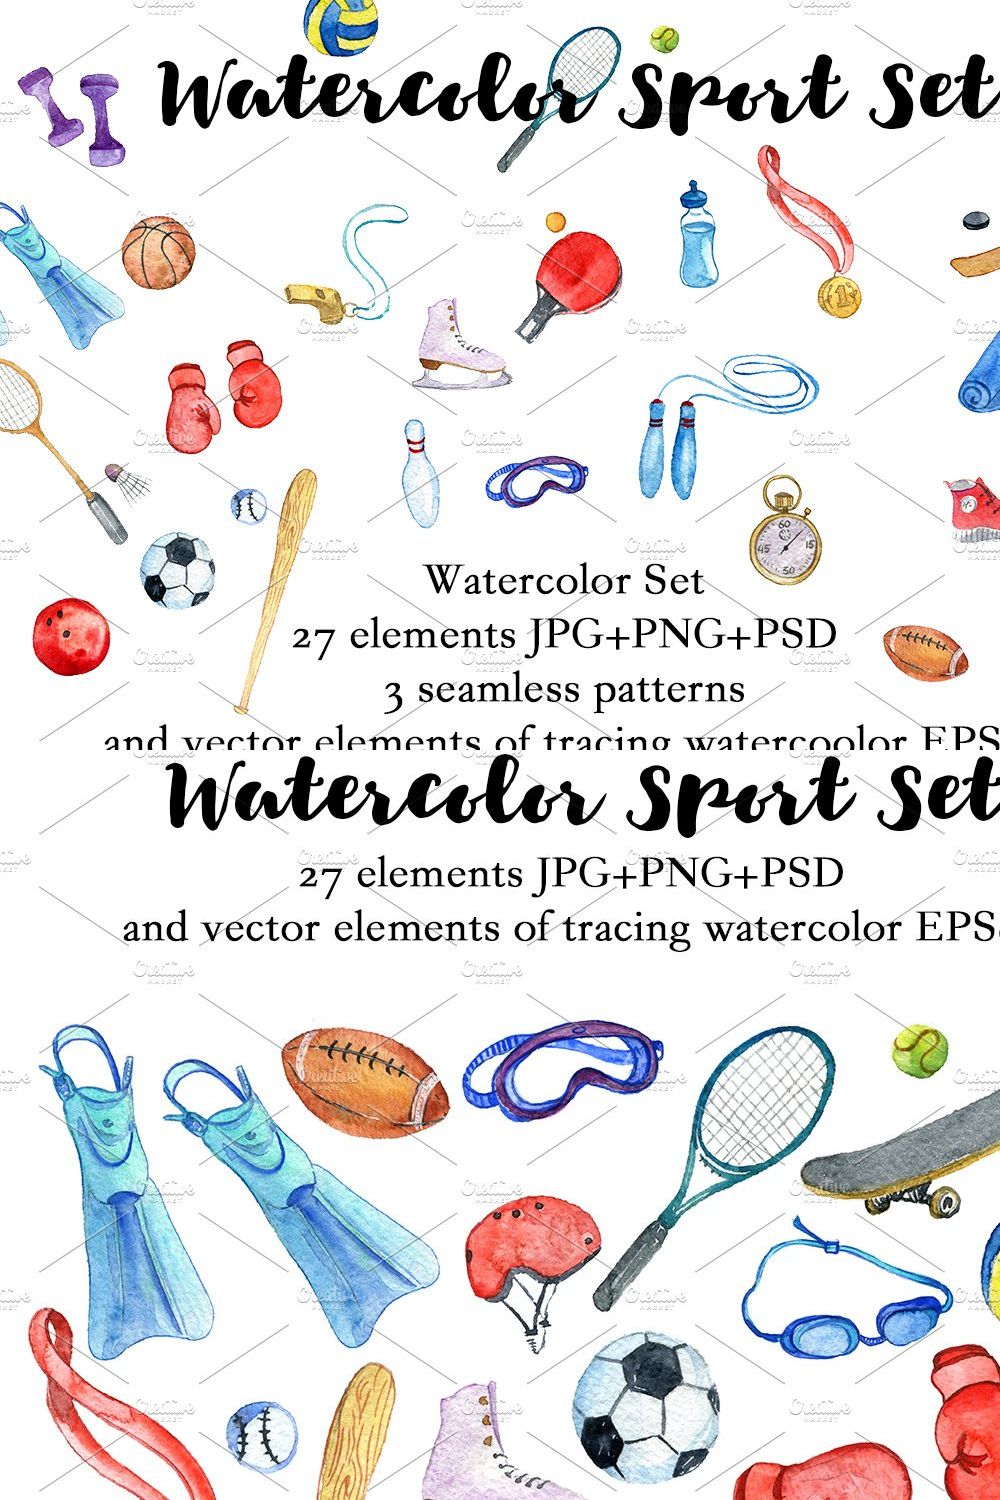 Watercolor sport set pinterest preview image.